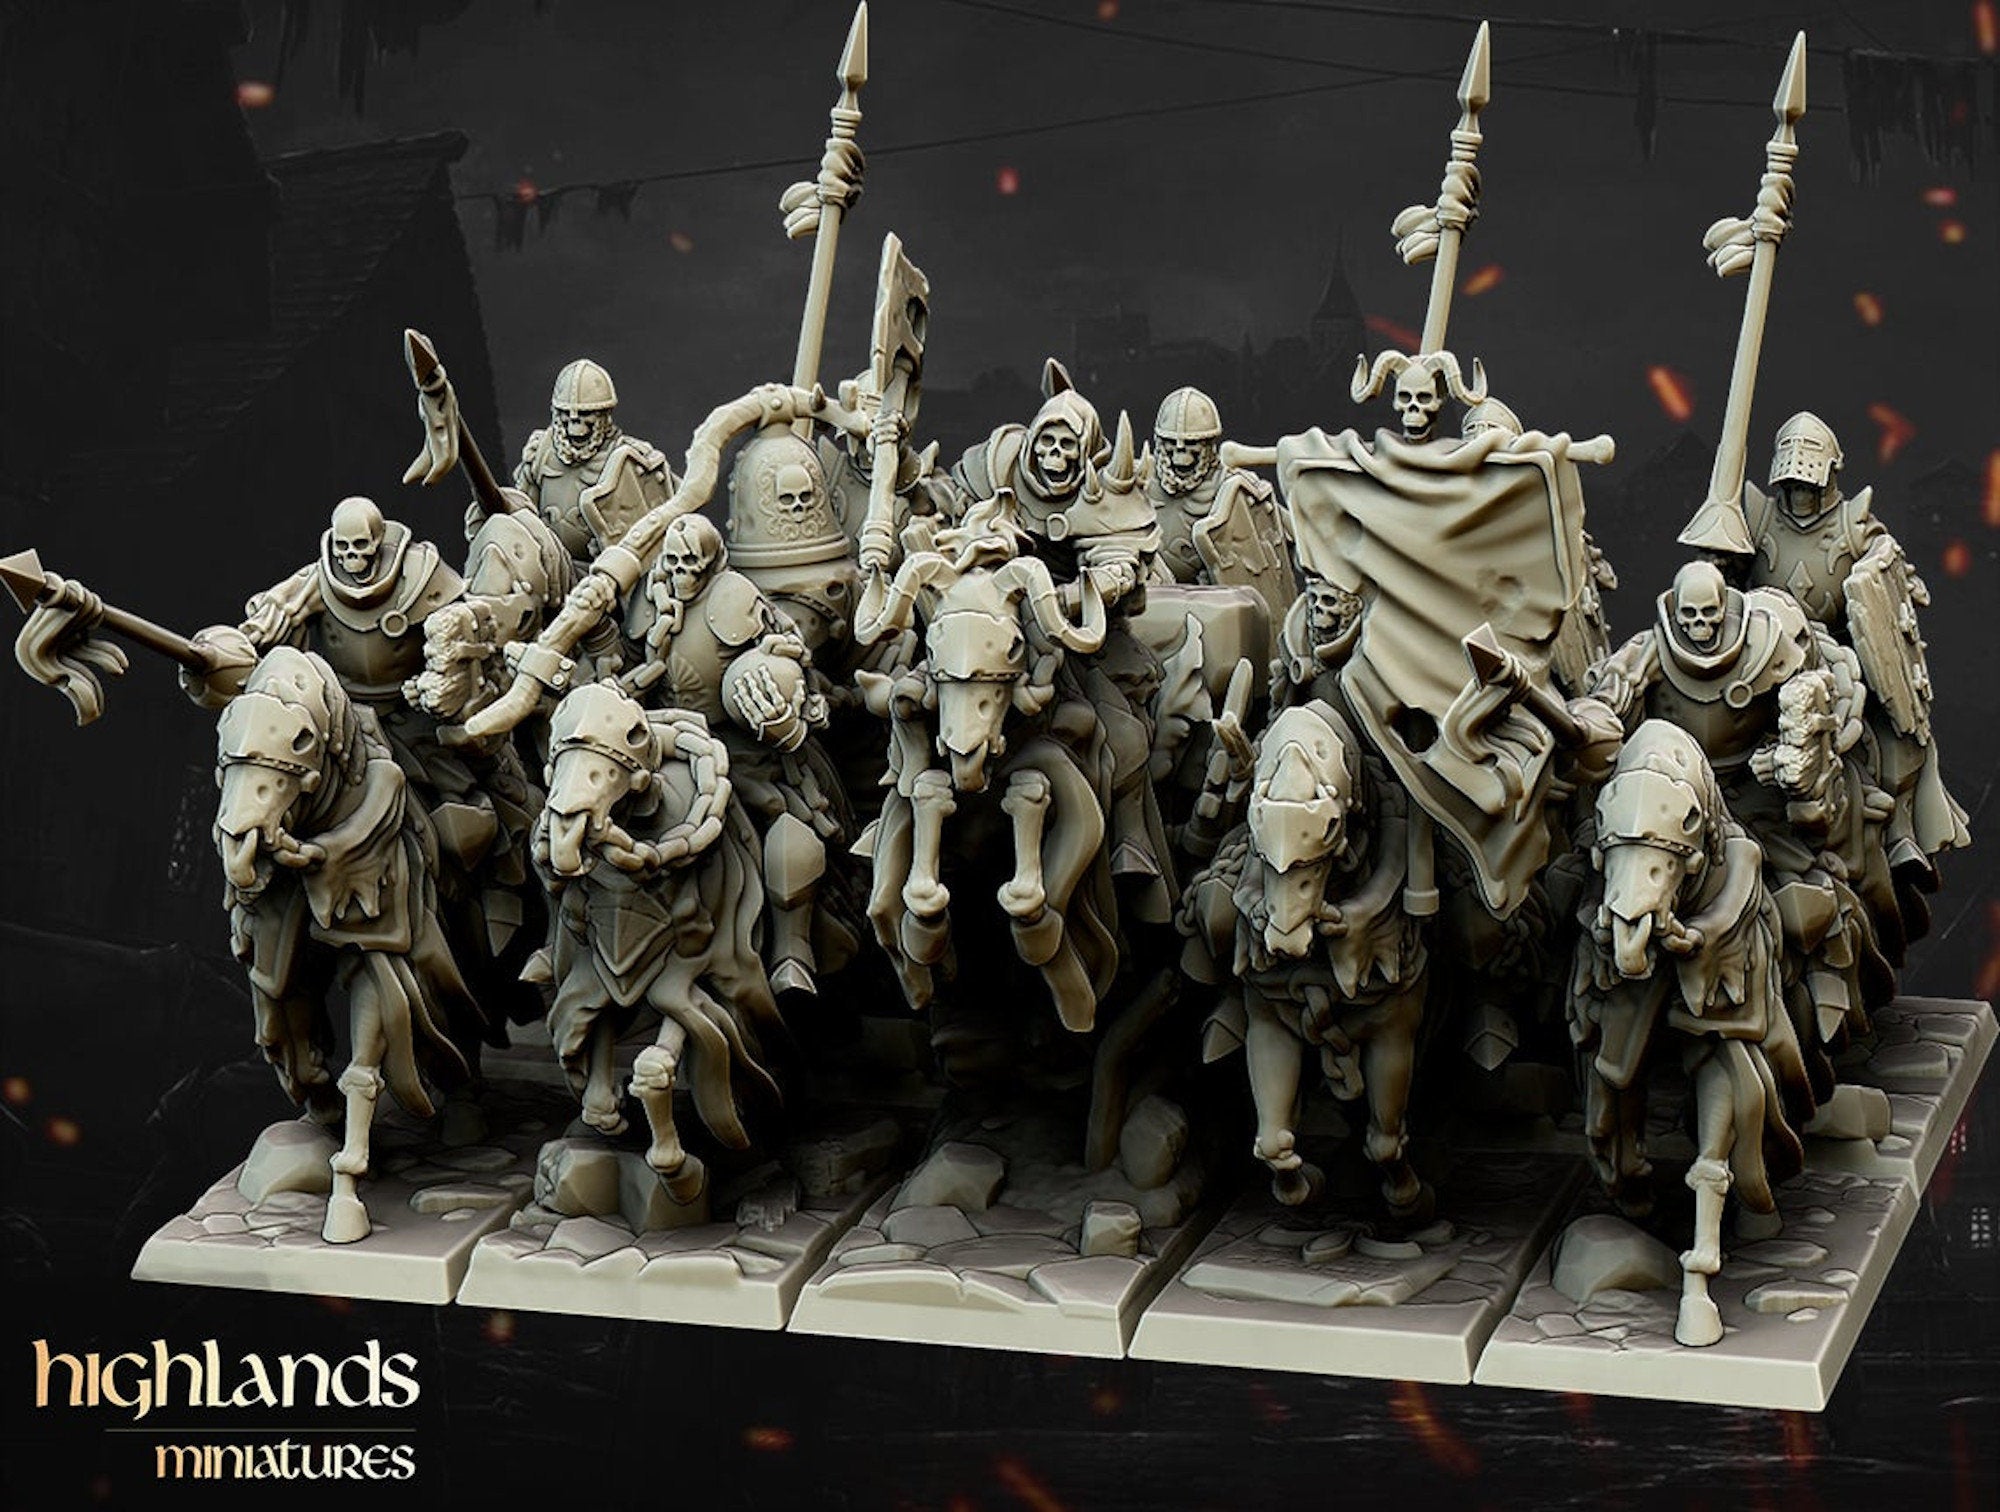 Transilvanya the Fallen Realm - Skeletal Knights (Dark Knights, Revenant) unit  by Highlands Miniatures